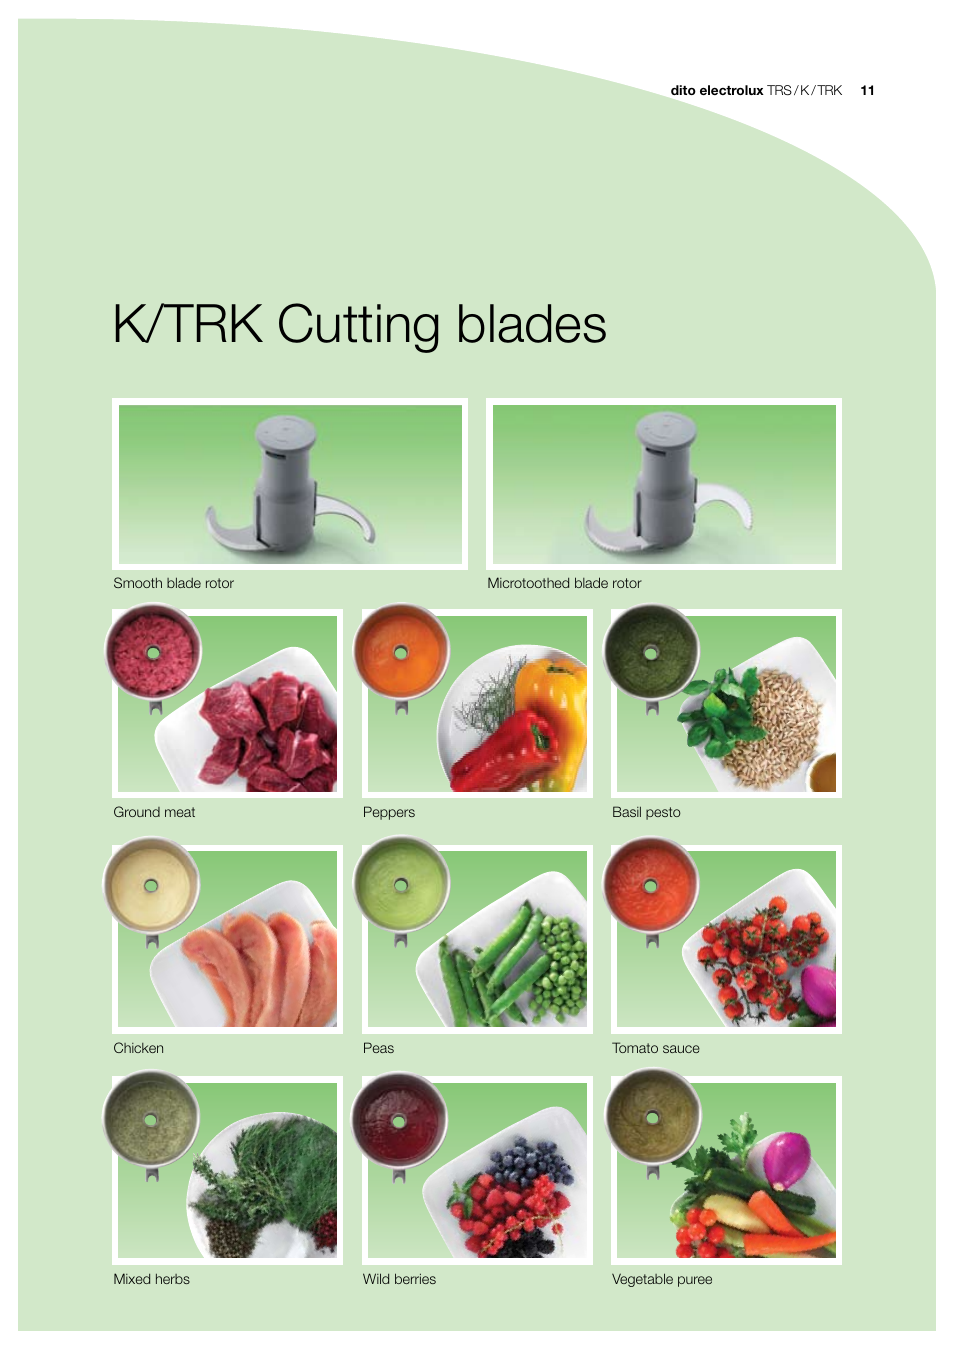 K/trk cutting blades | Electrolux K55 User Manual | Page 11 / 12